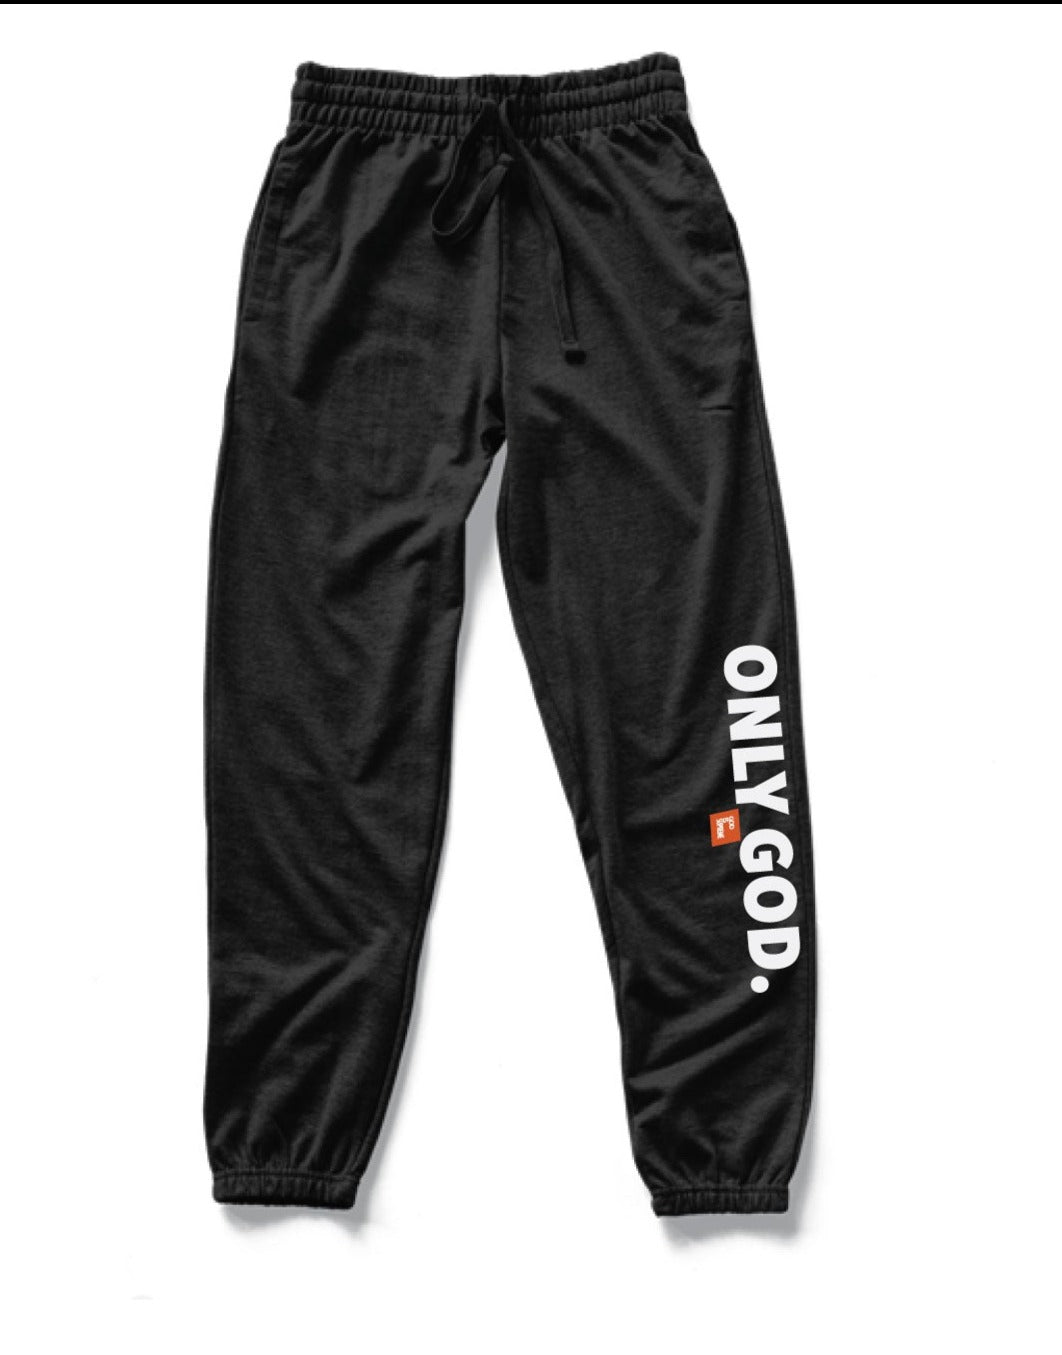 Only God with Box Logo/Black Sweatpants